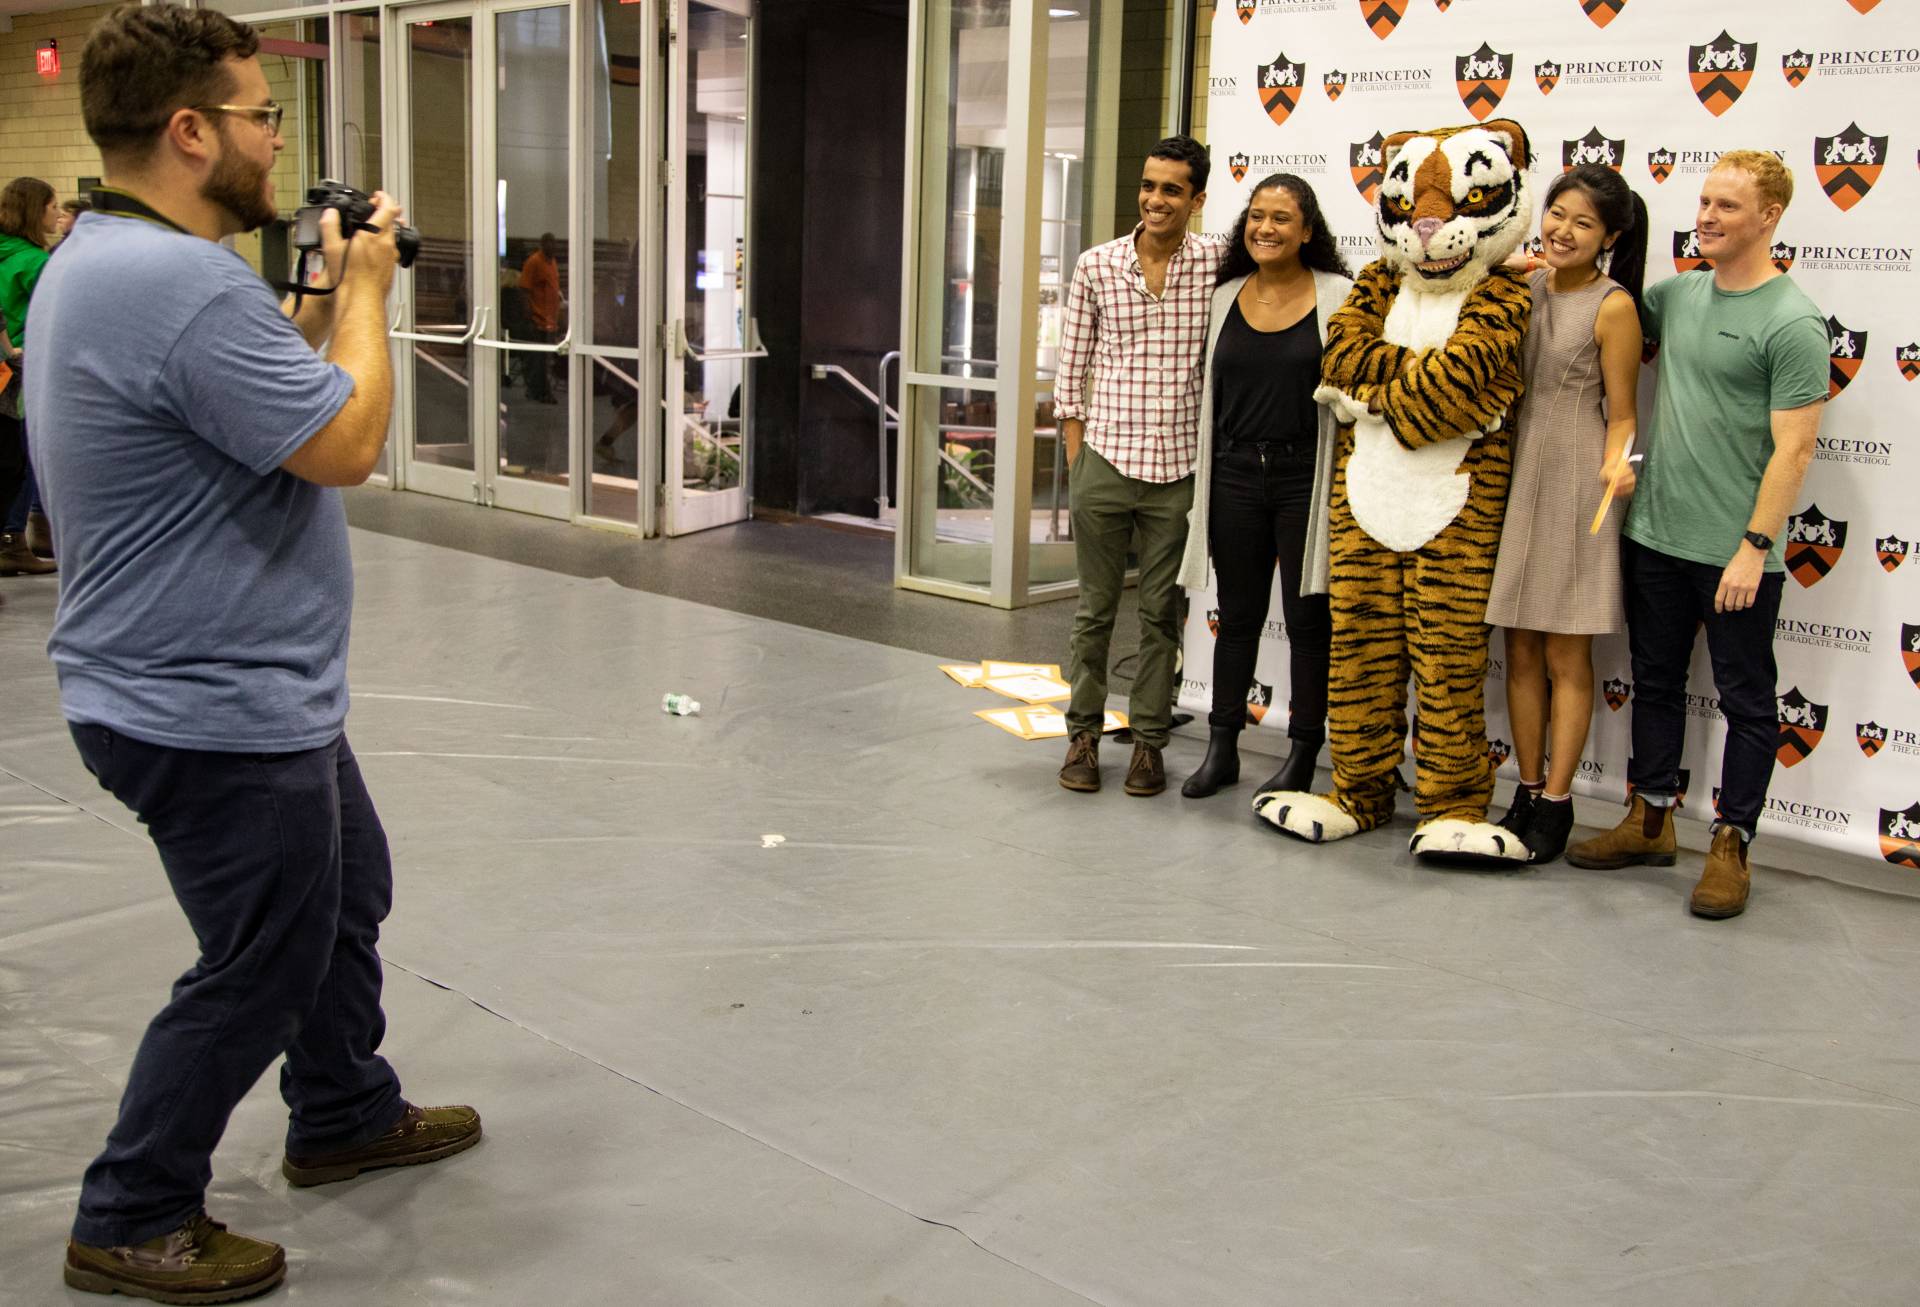 Graduate students posing with Princeton tiger mascot